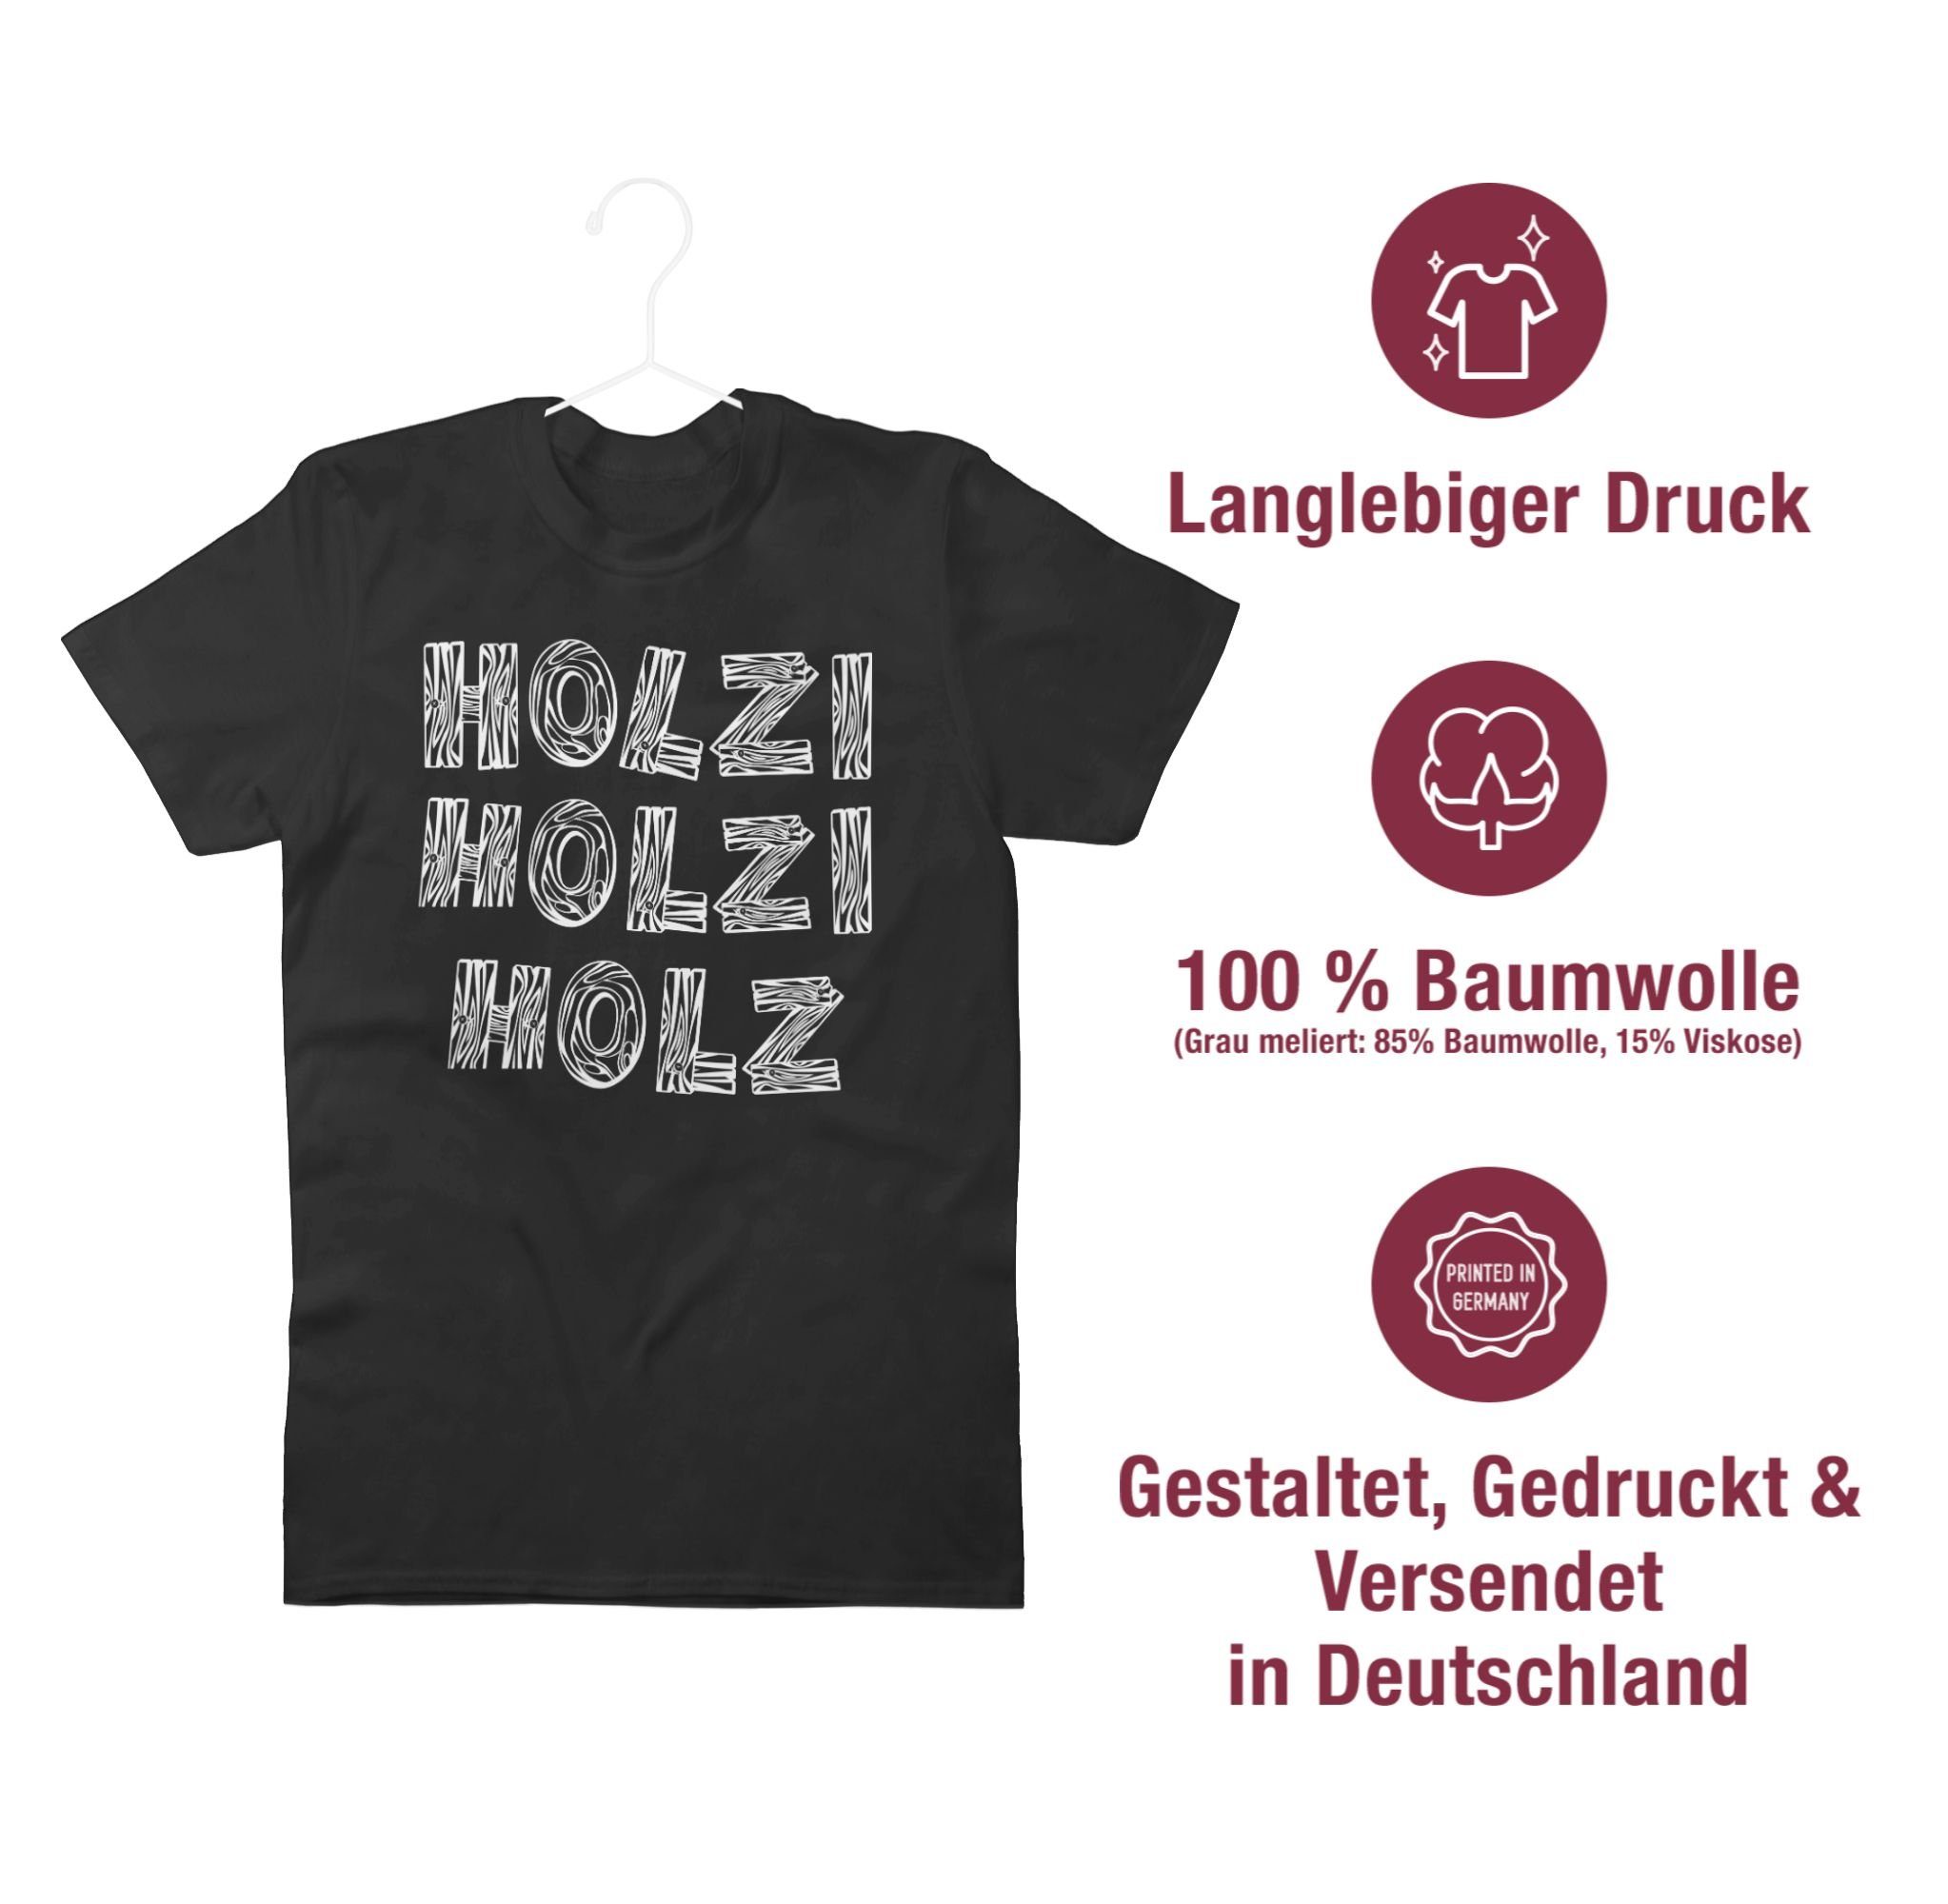 Shirtracer T-Shirt Holzi Holz Holz Schwarz Sprüche 1 Statement mit Spruch